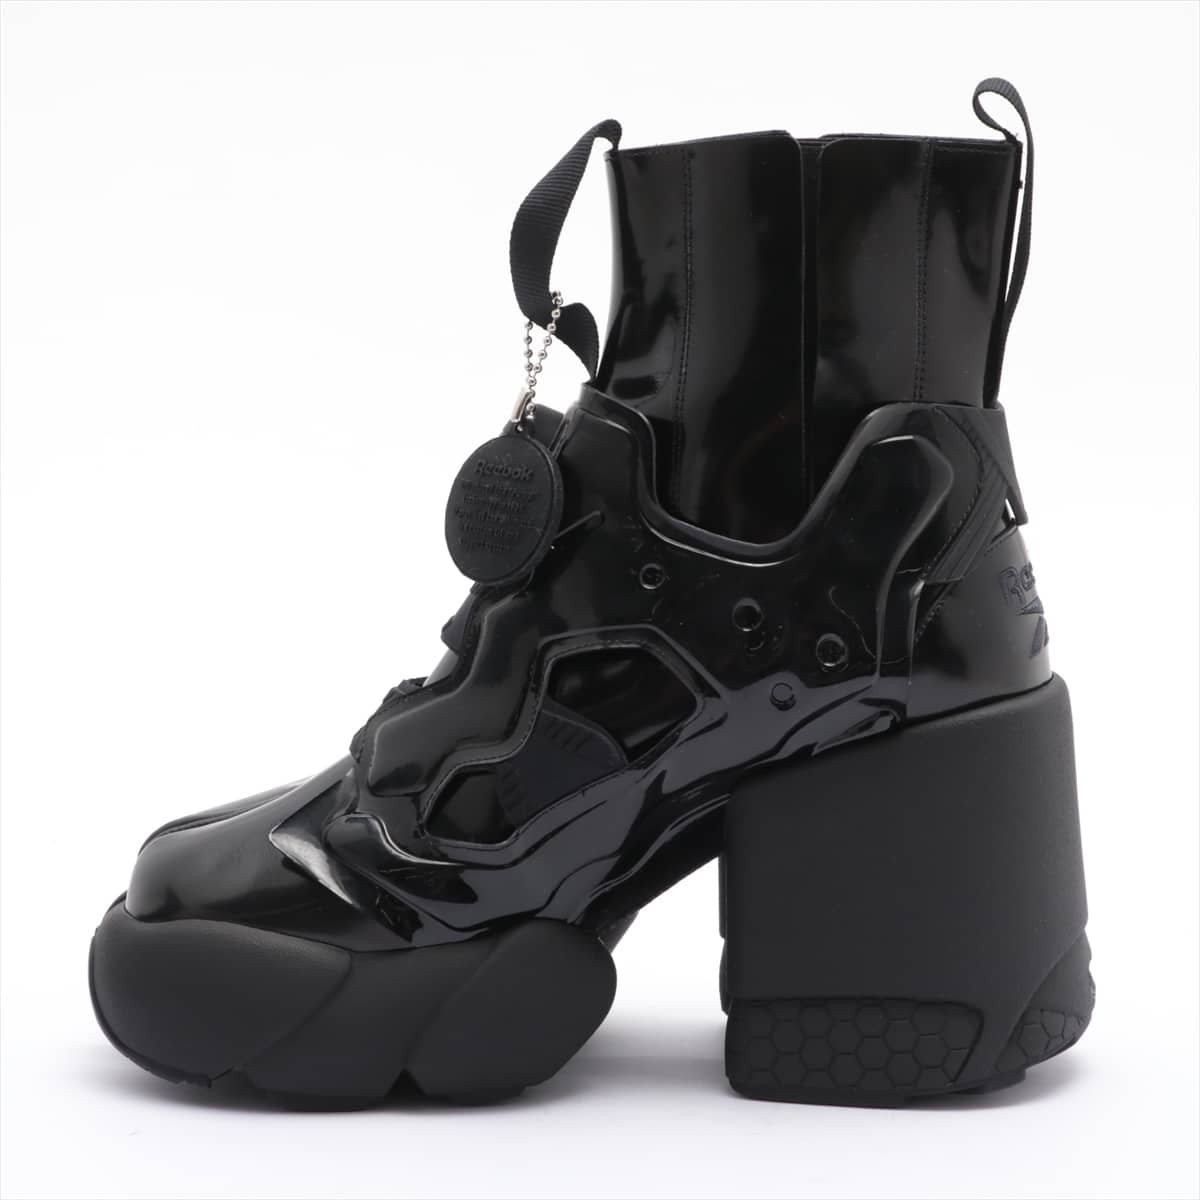 Maison Margiela x Reebok Leather × Rubber Boots 37 Ladies' Black ? Tabi Instapump Fury High